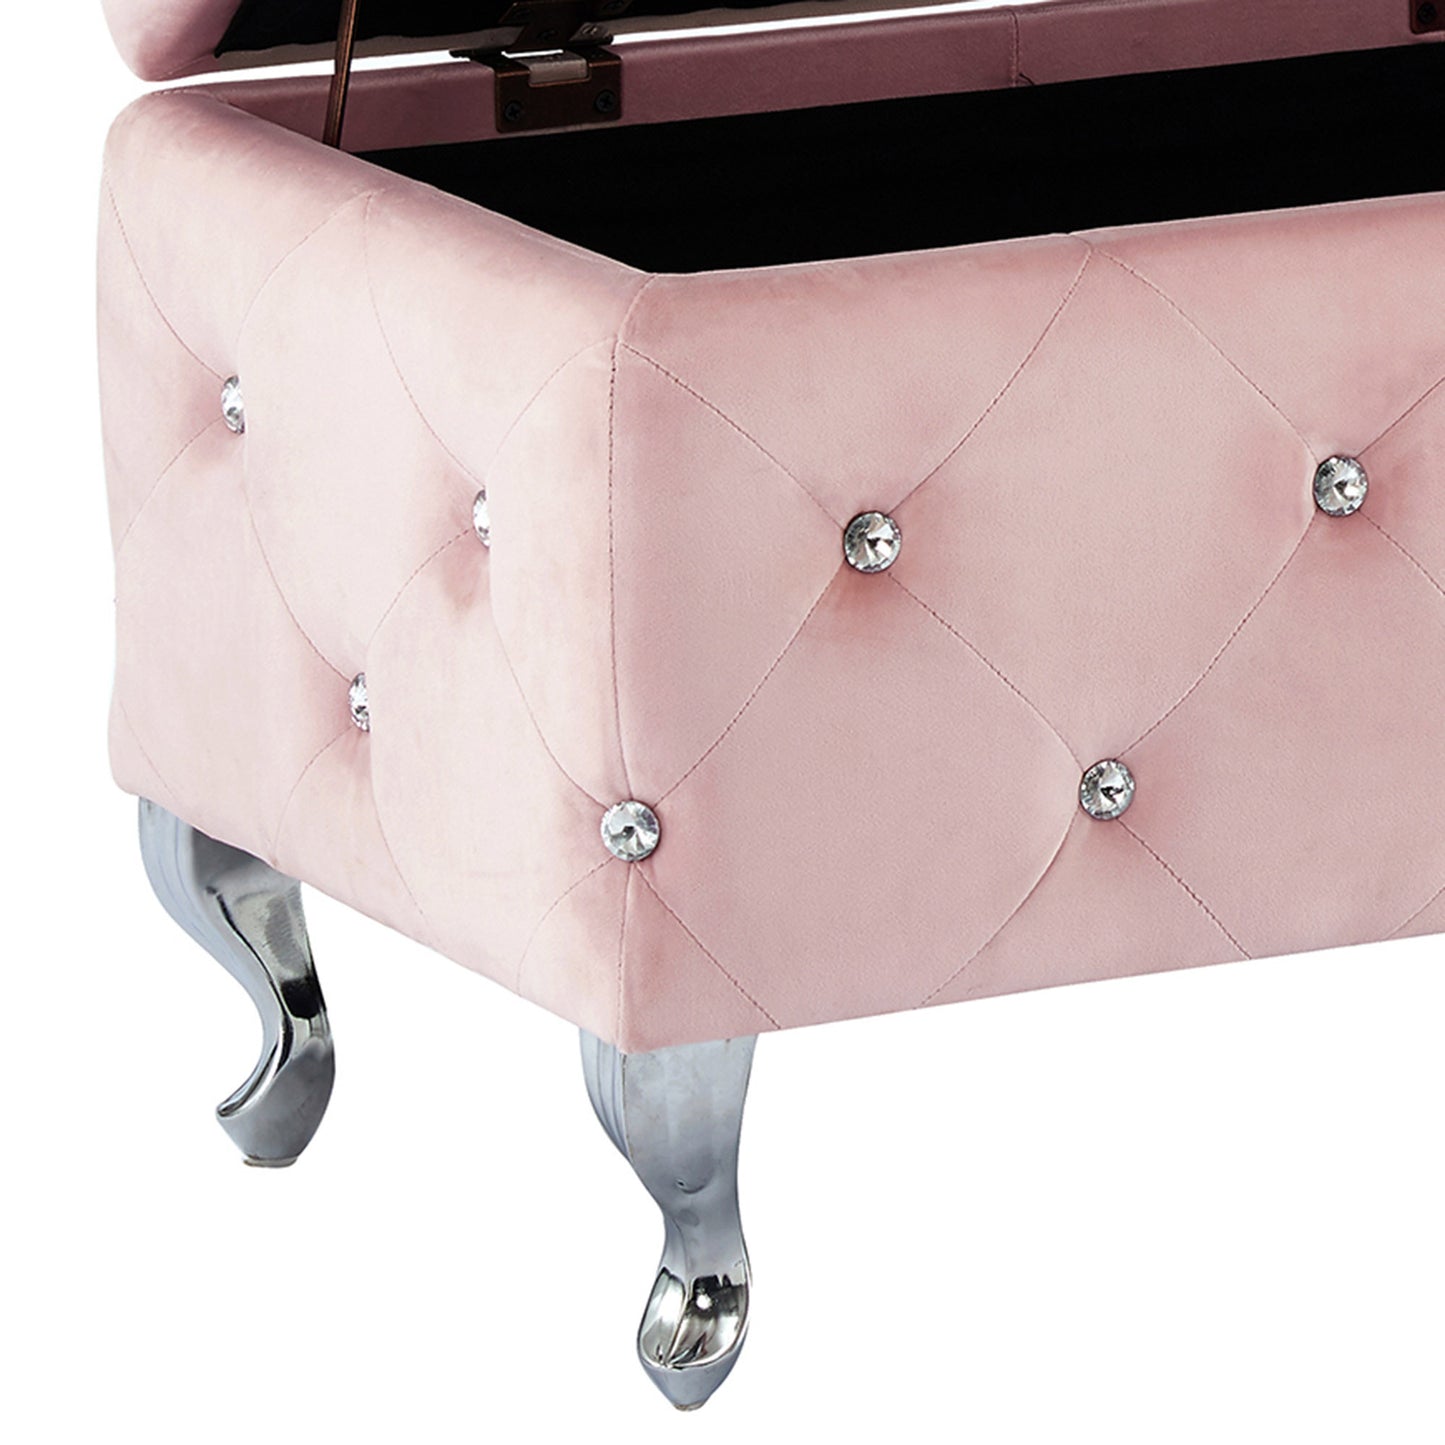 Monique Rectangular Storage Ottoman in Blush Pink and Chrome